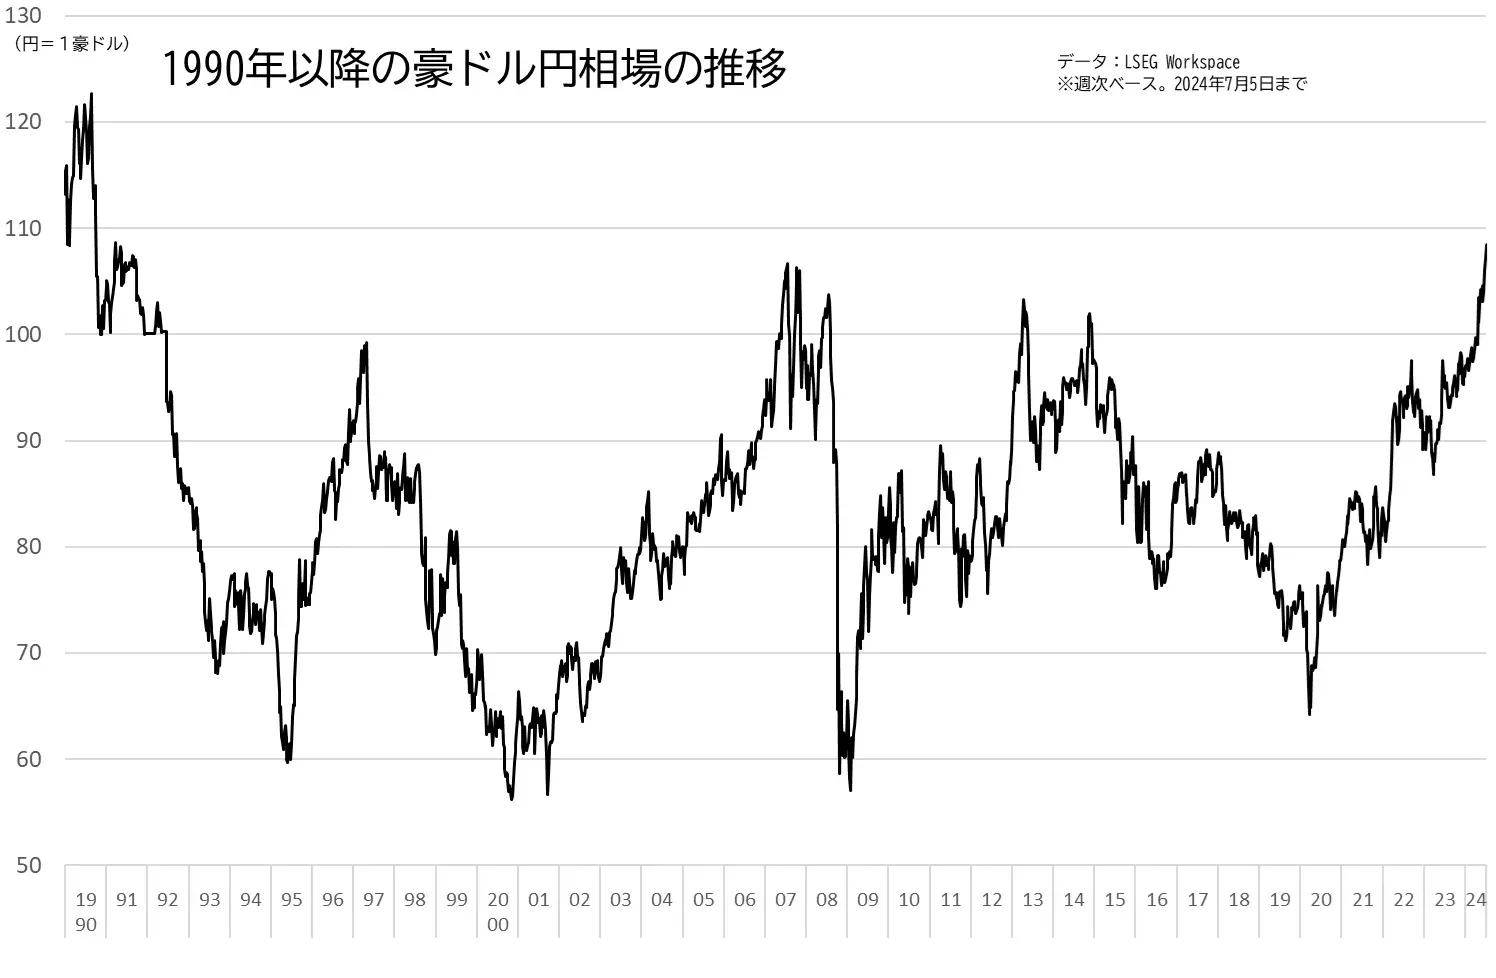 豪ドル円相場の推移（長期、1990年以降）